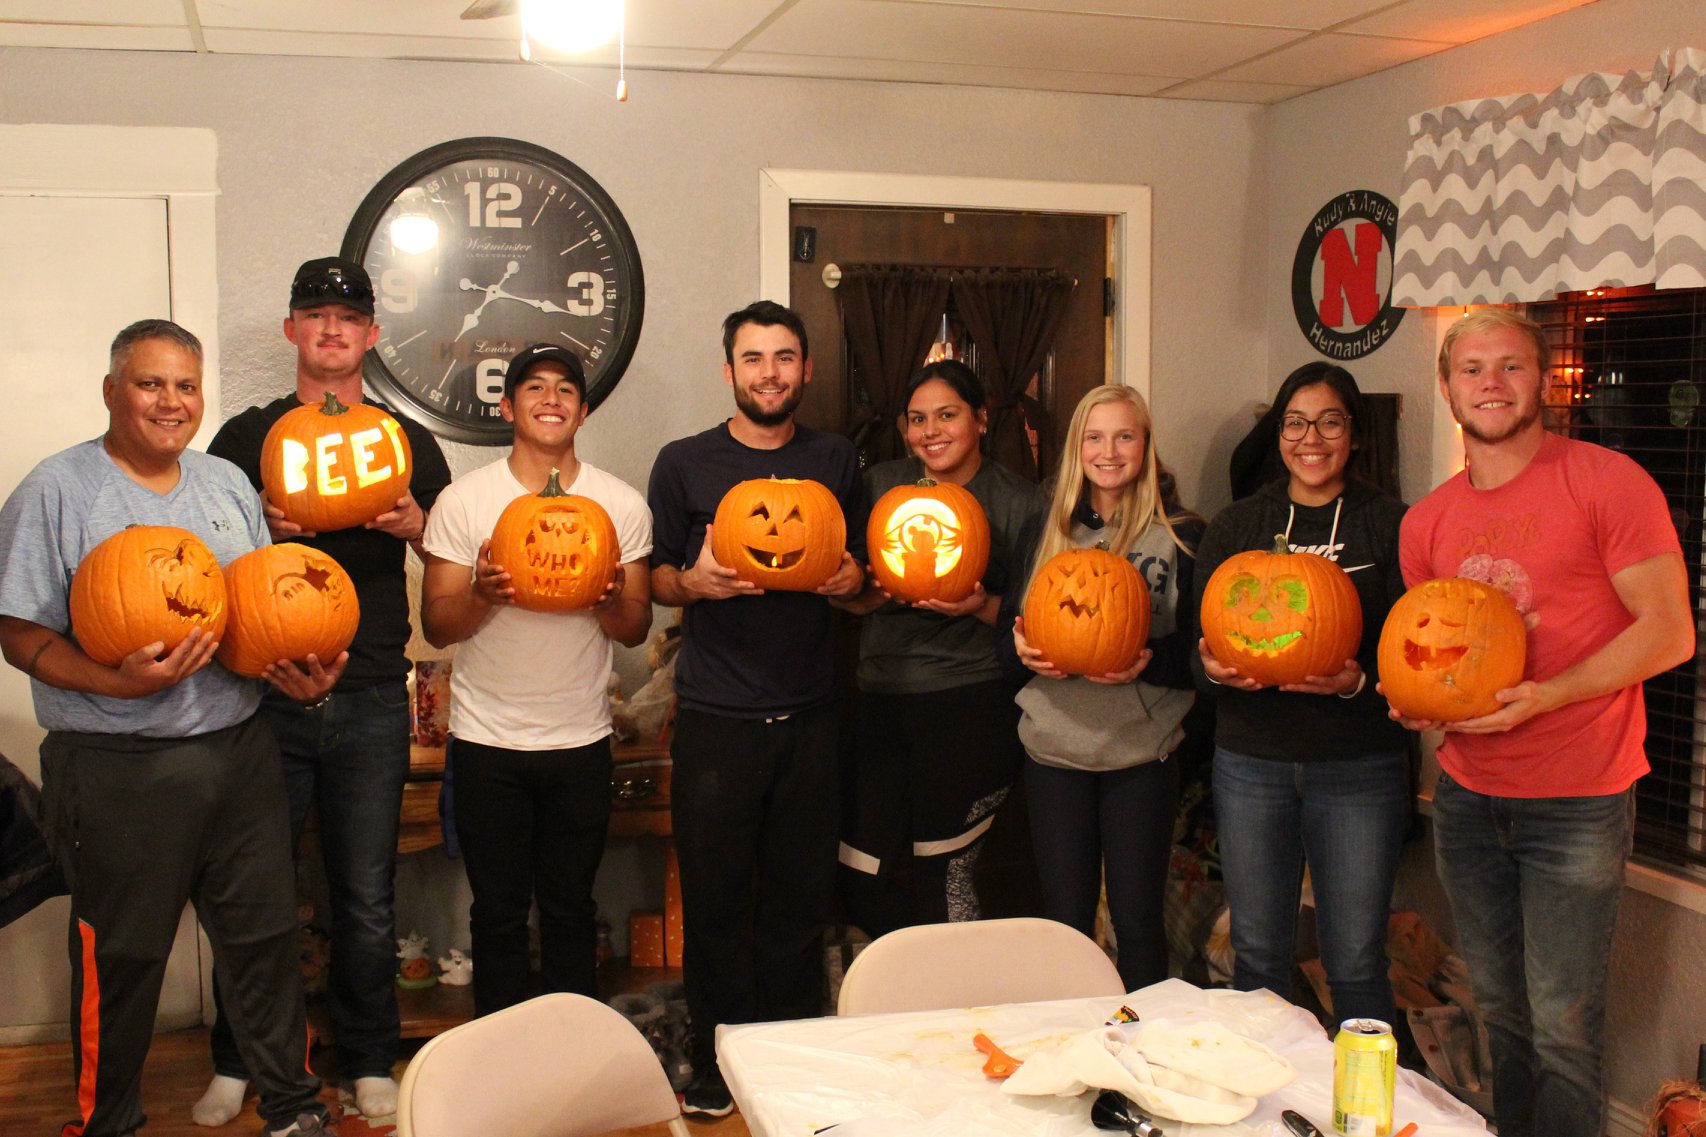 The Hernandez have their dorm kids over for pumpkin carving